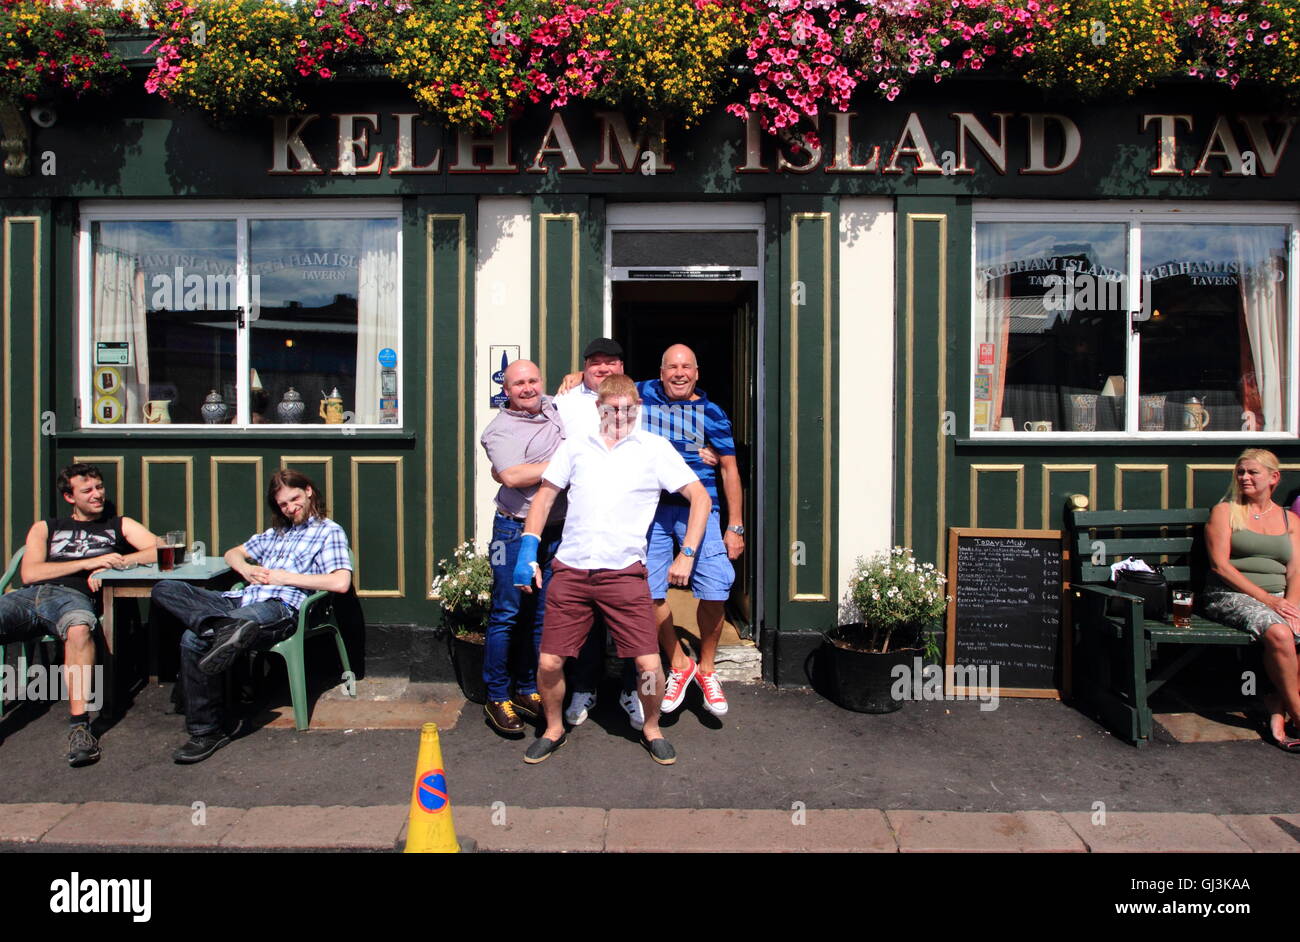 A group of men pose for a photo before entering Kelham Island Tavern, Kelham Island, Sheffield, South Yorkshire, England UK Stock Photo